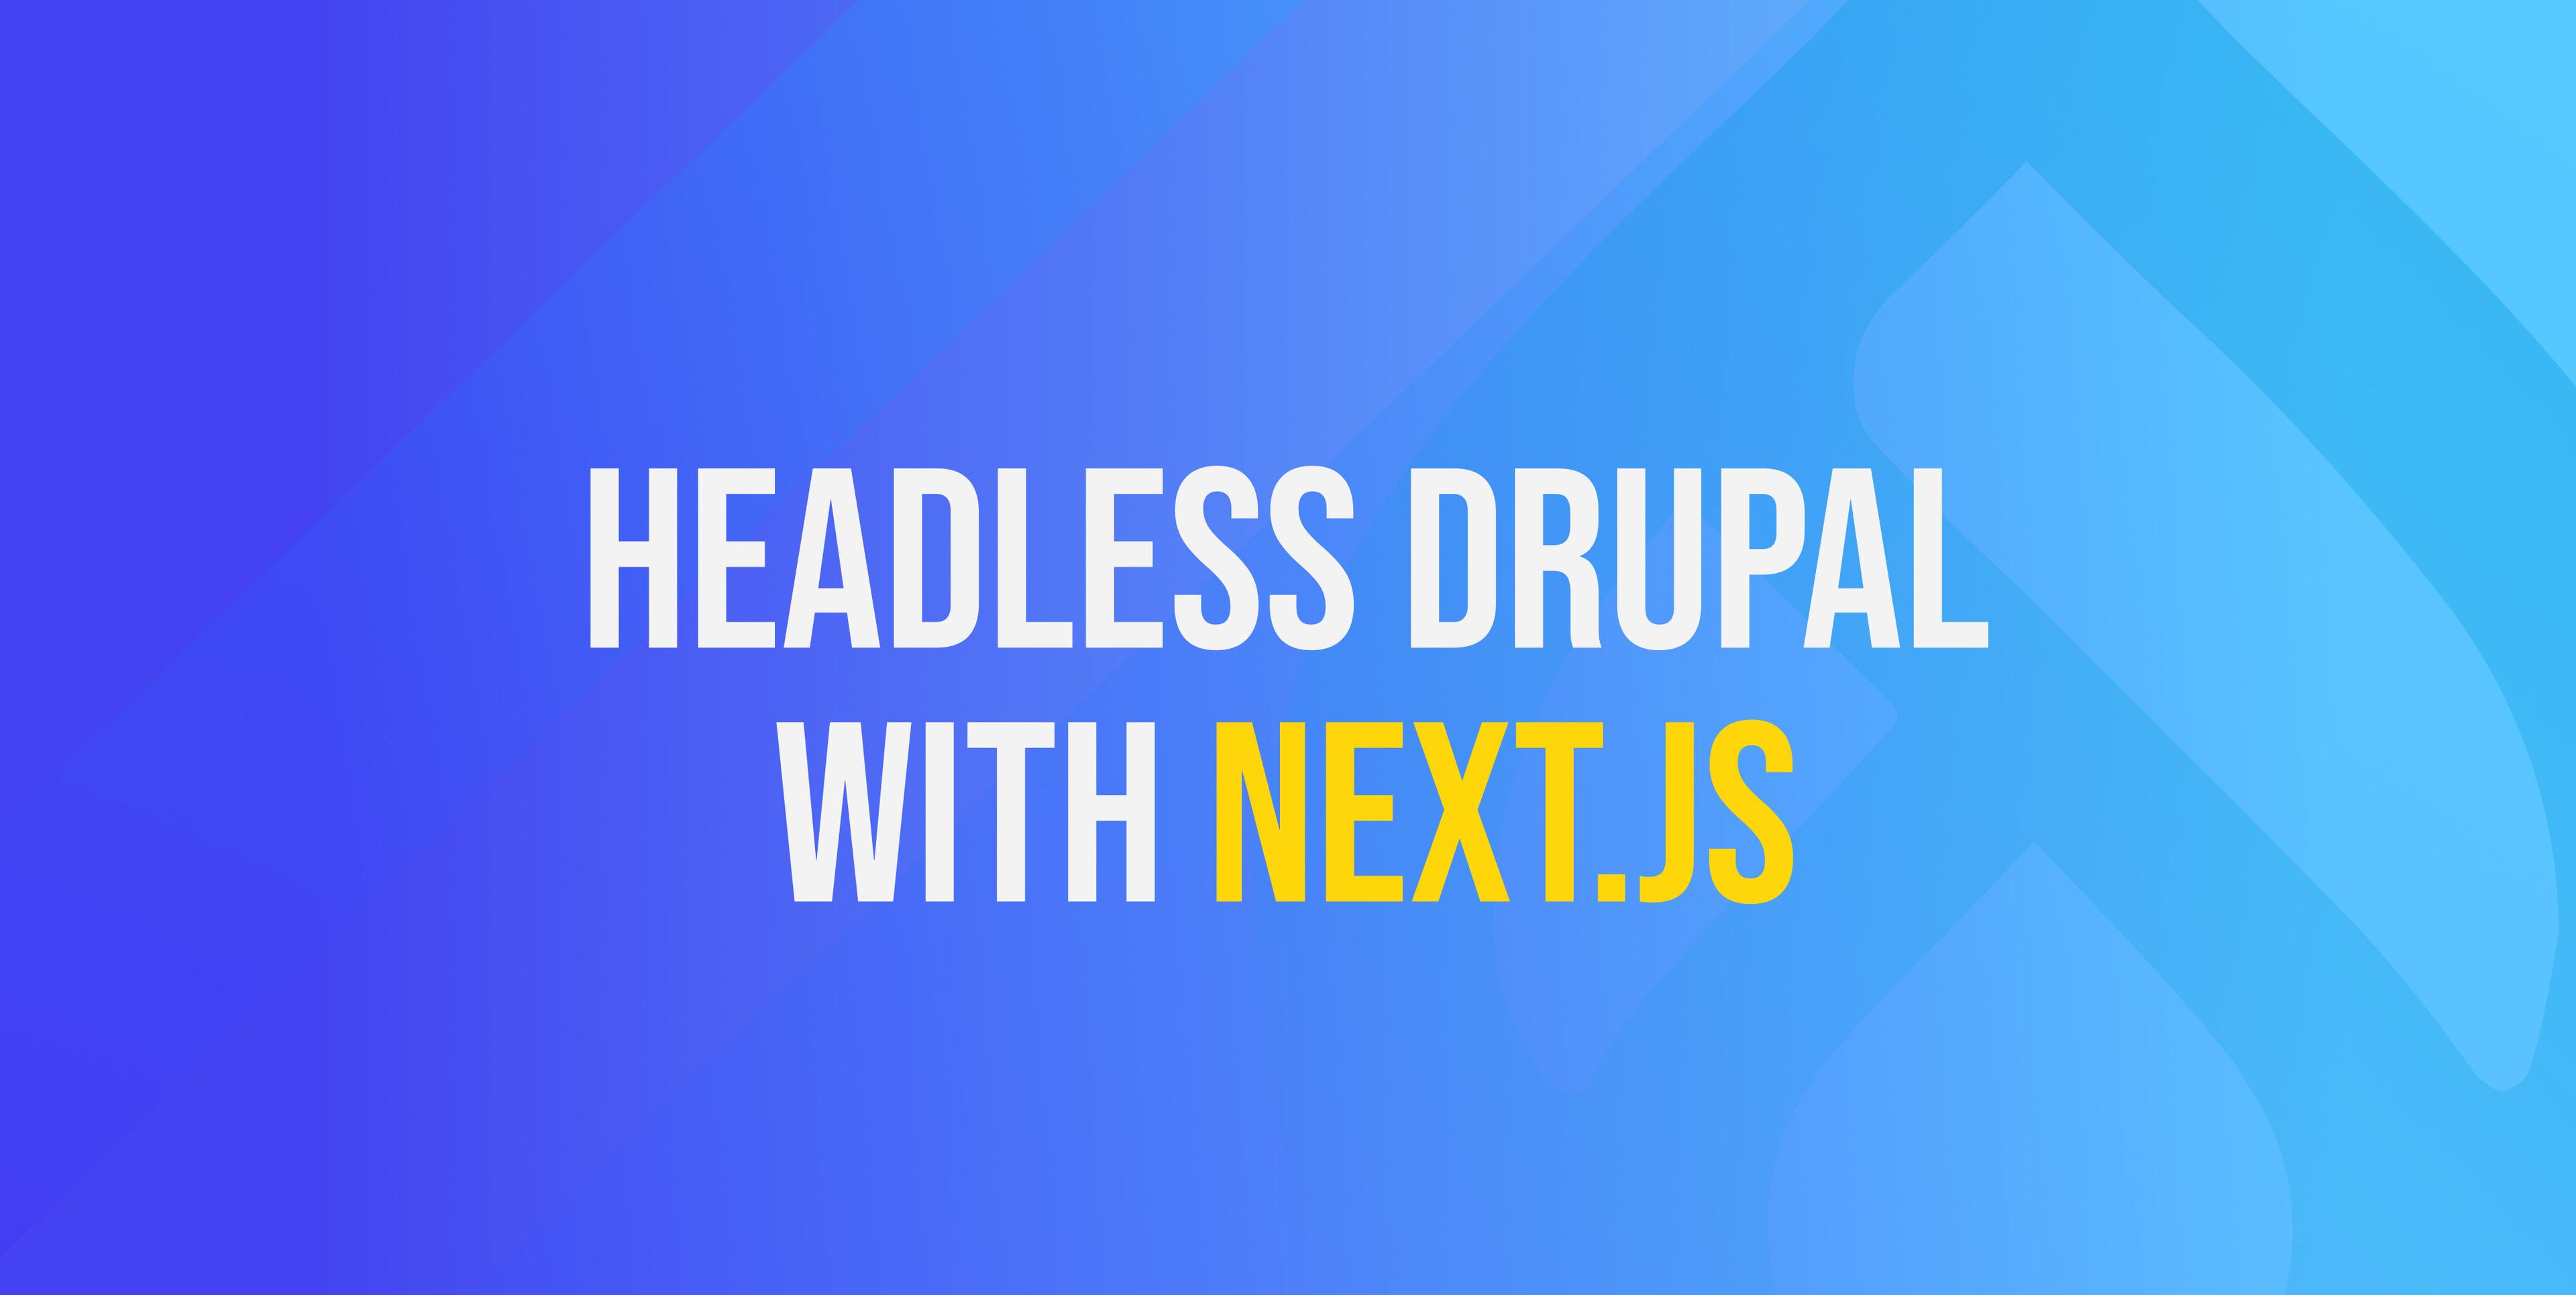 Headless Drupal with Next.js - simple example walkthrough